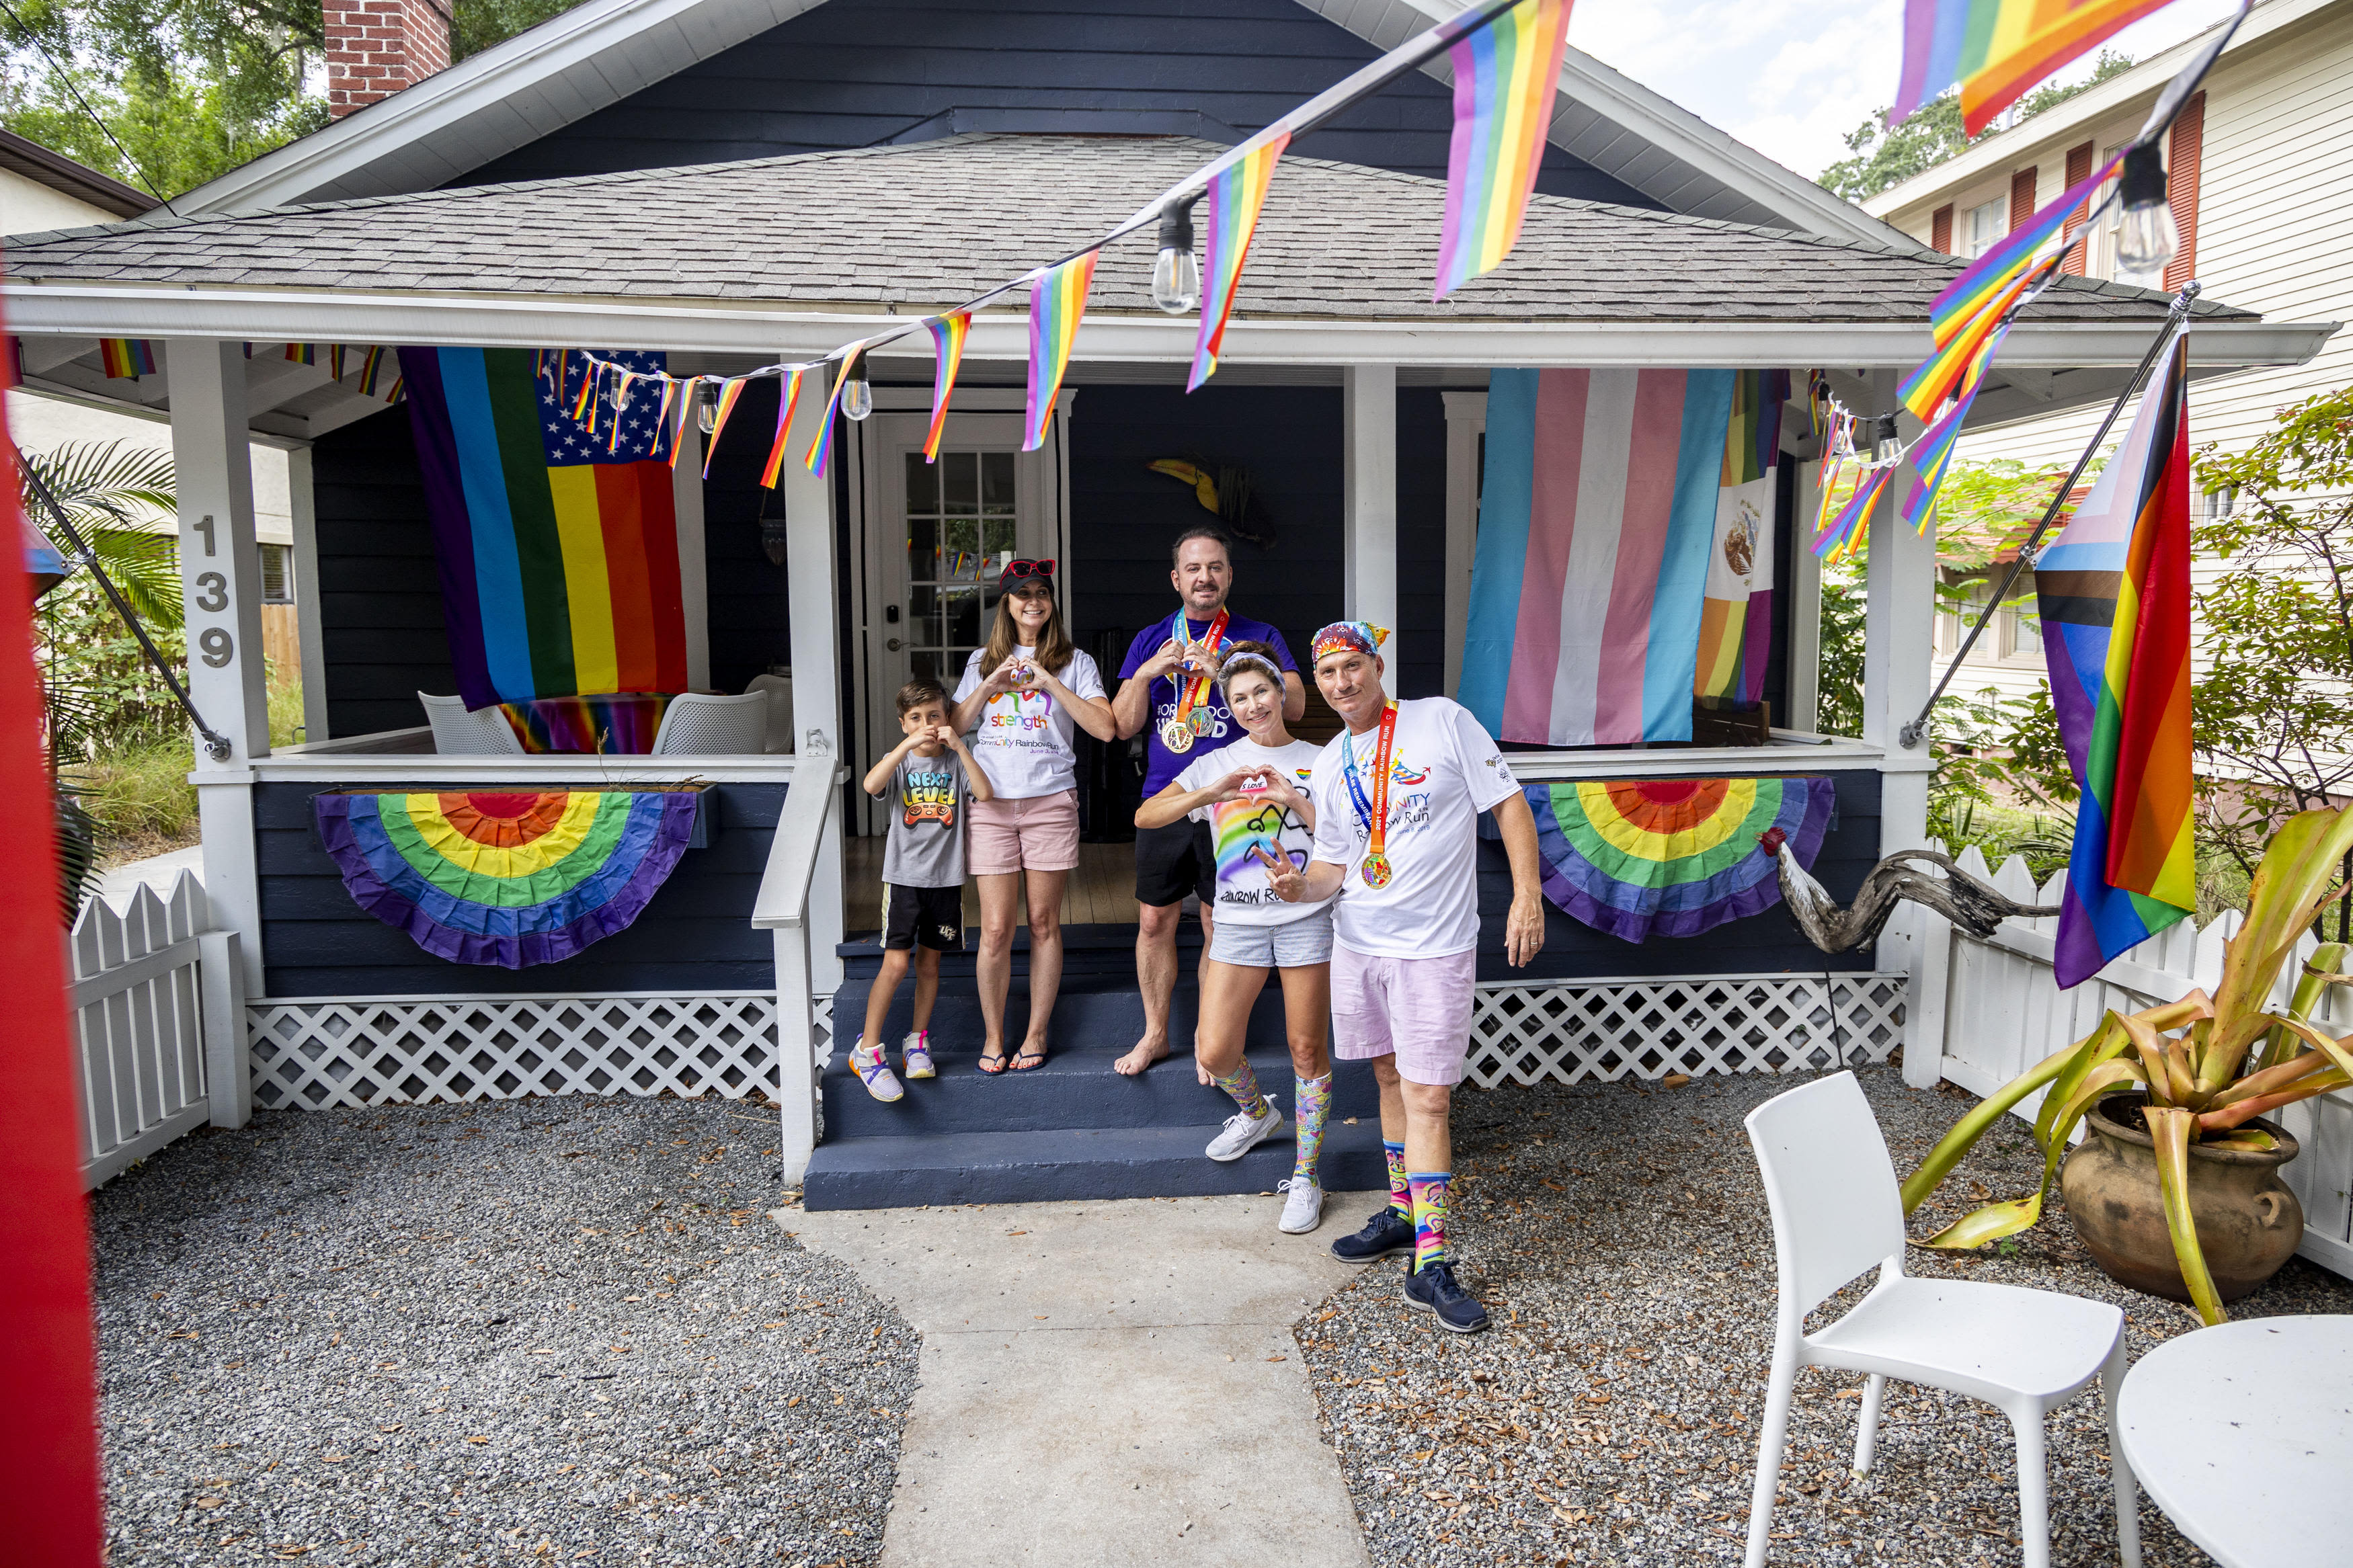 Orlando jettisons traditional route for Pulse Rainbow Run, irking neighbors